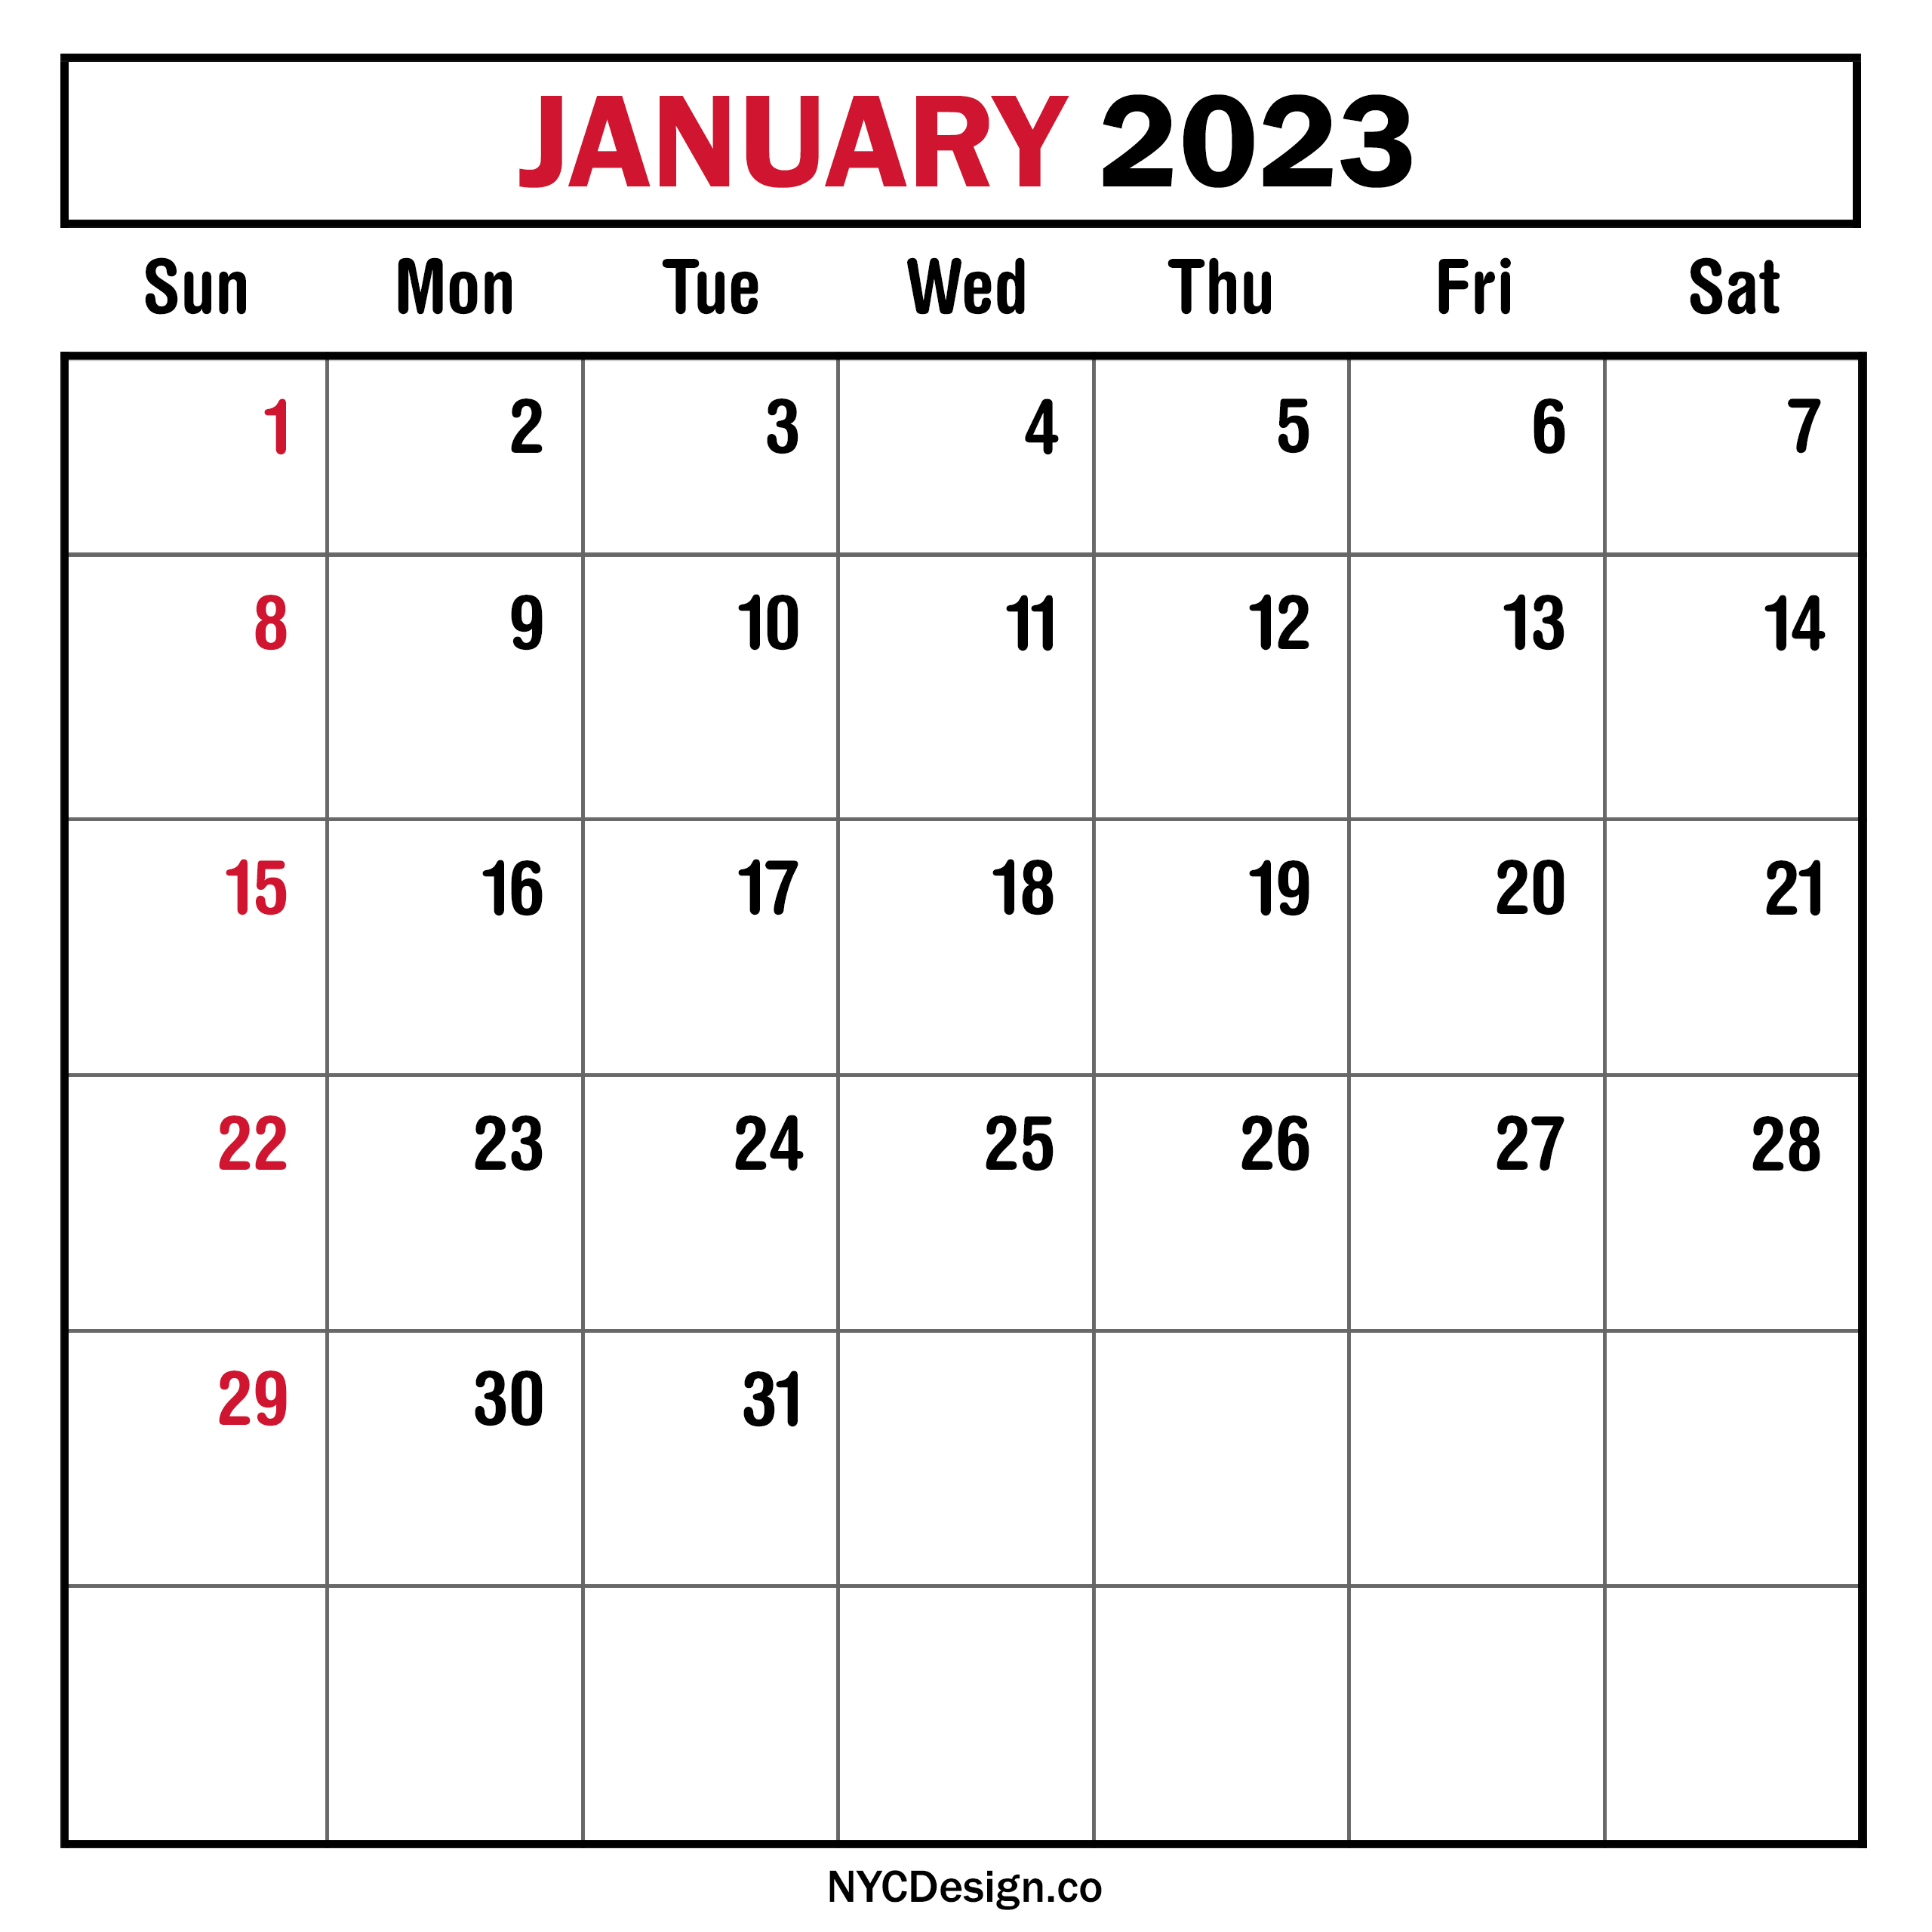 January 2023 Monthly Calendar, Planner, Printable Free – Sunday Start ...